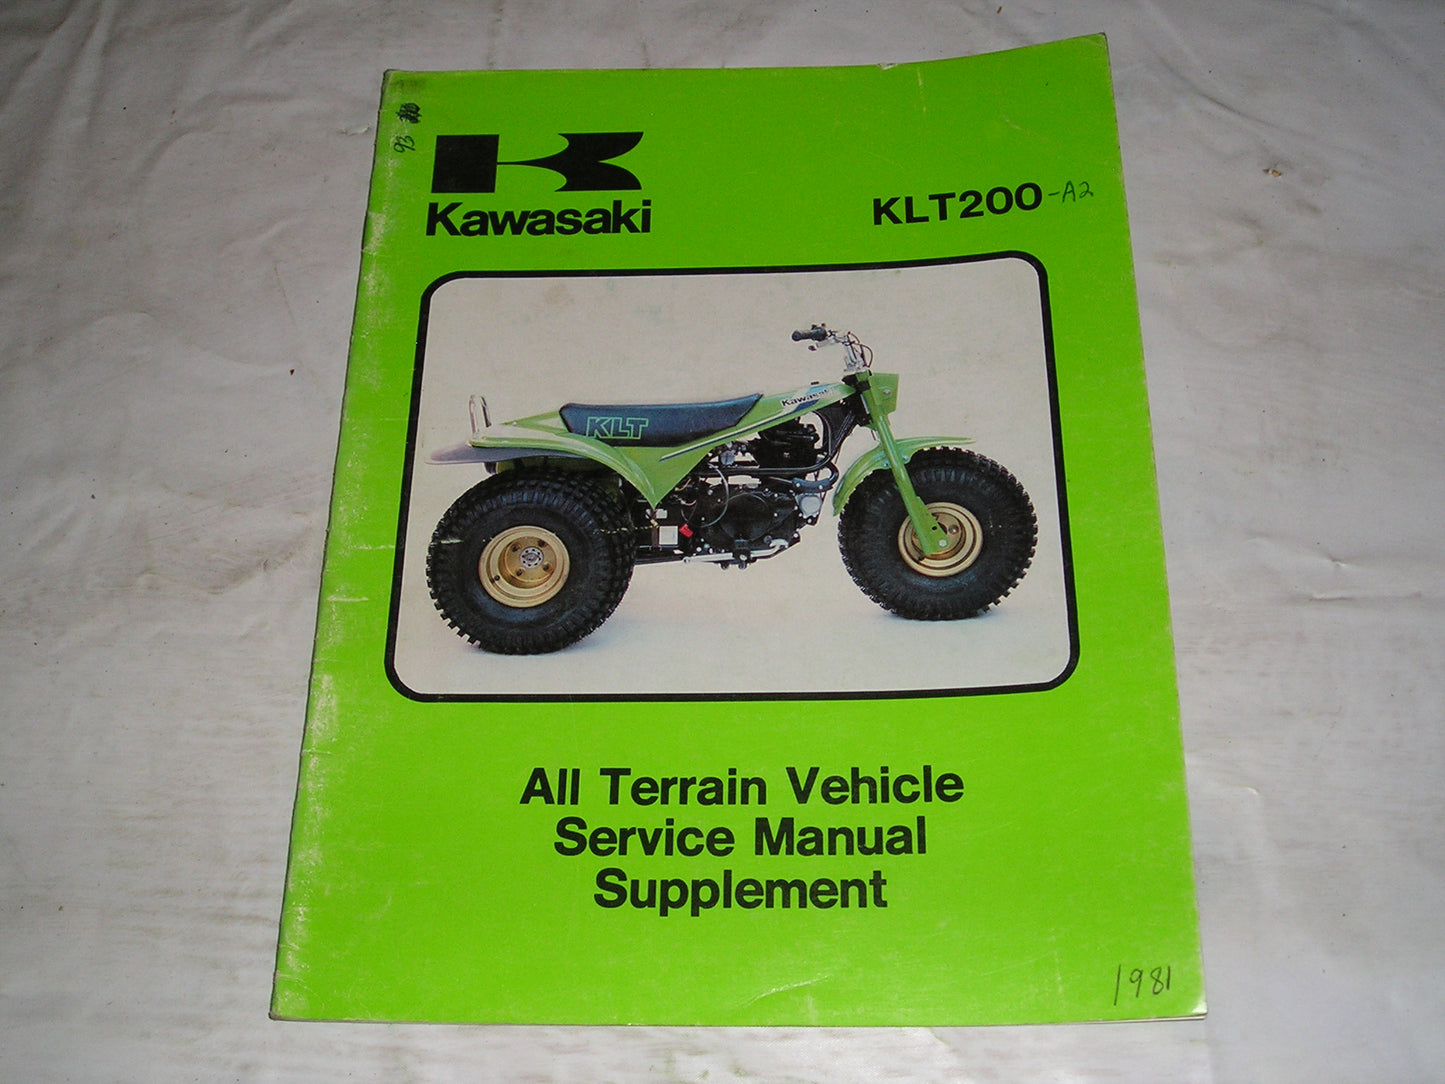 KAWASAKI KLT200 A2 1981 Service Supplement Manual  99963-0037-21  #93